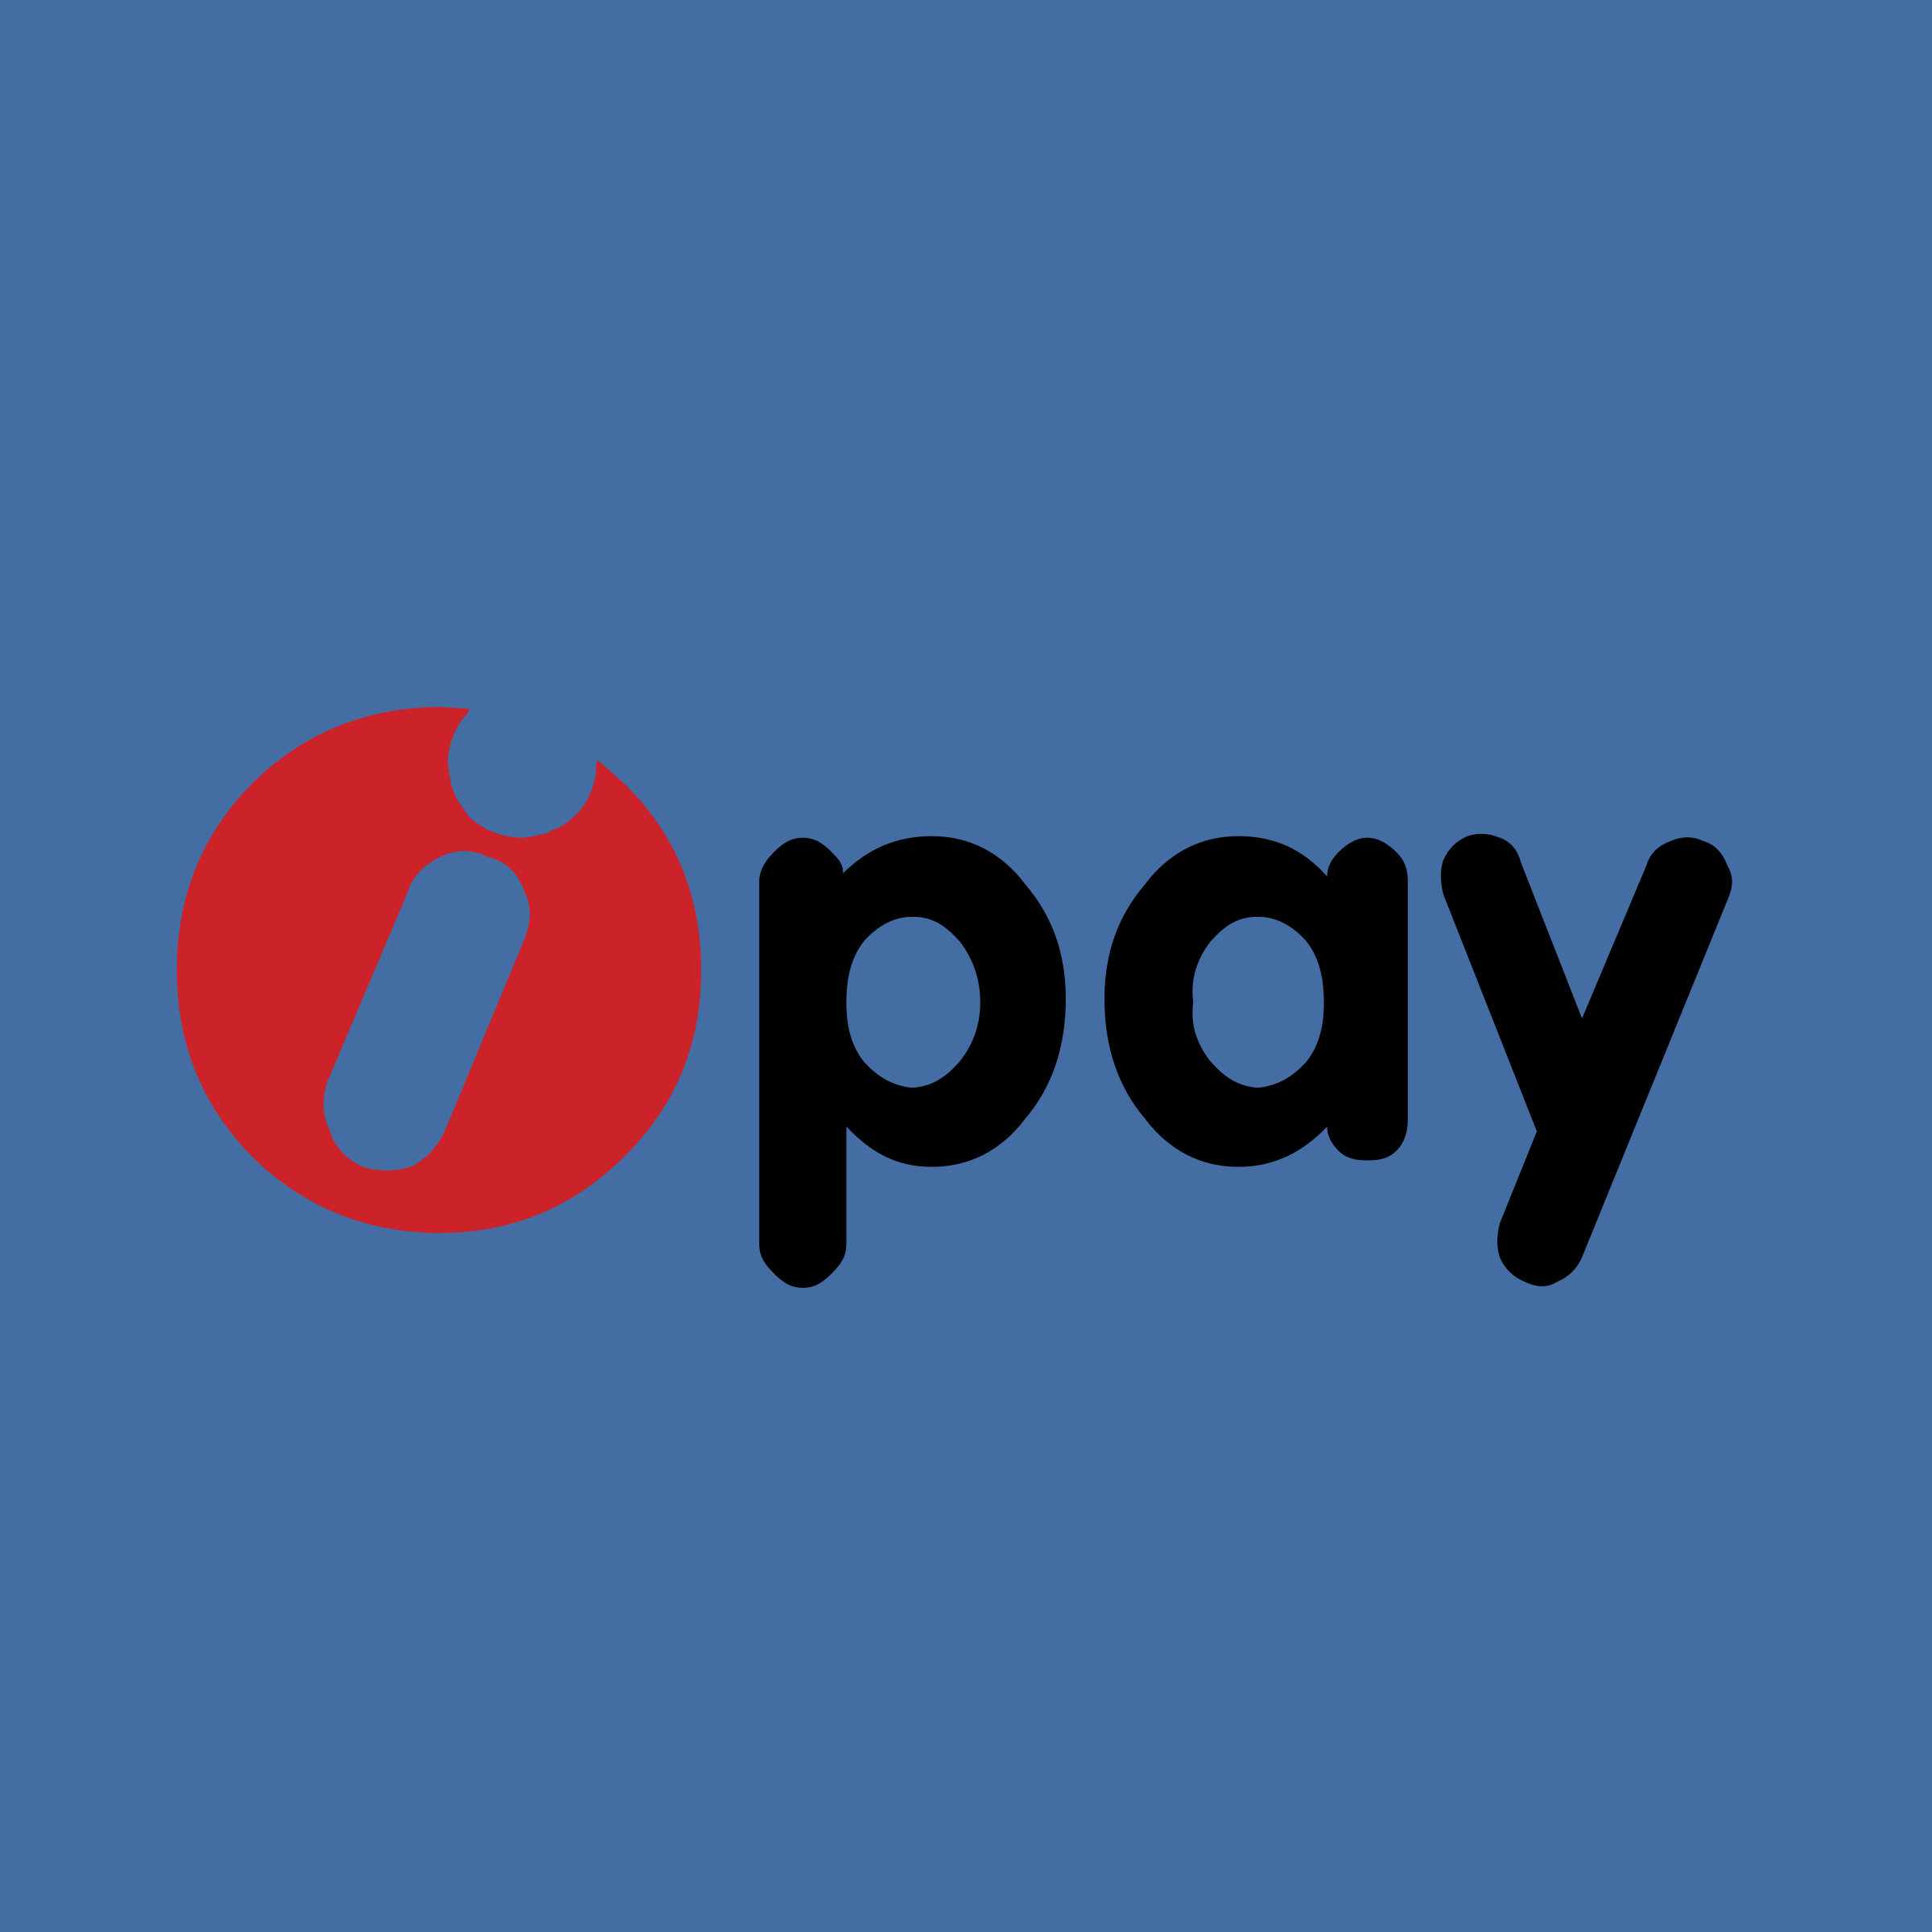 iPay Logo - Ipay Logo PNG Transparent & SVG Vector